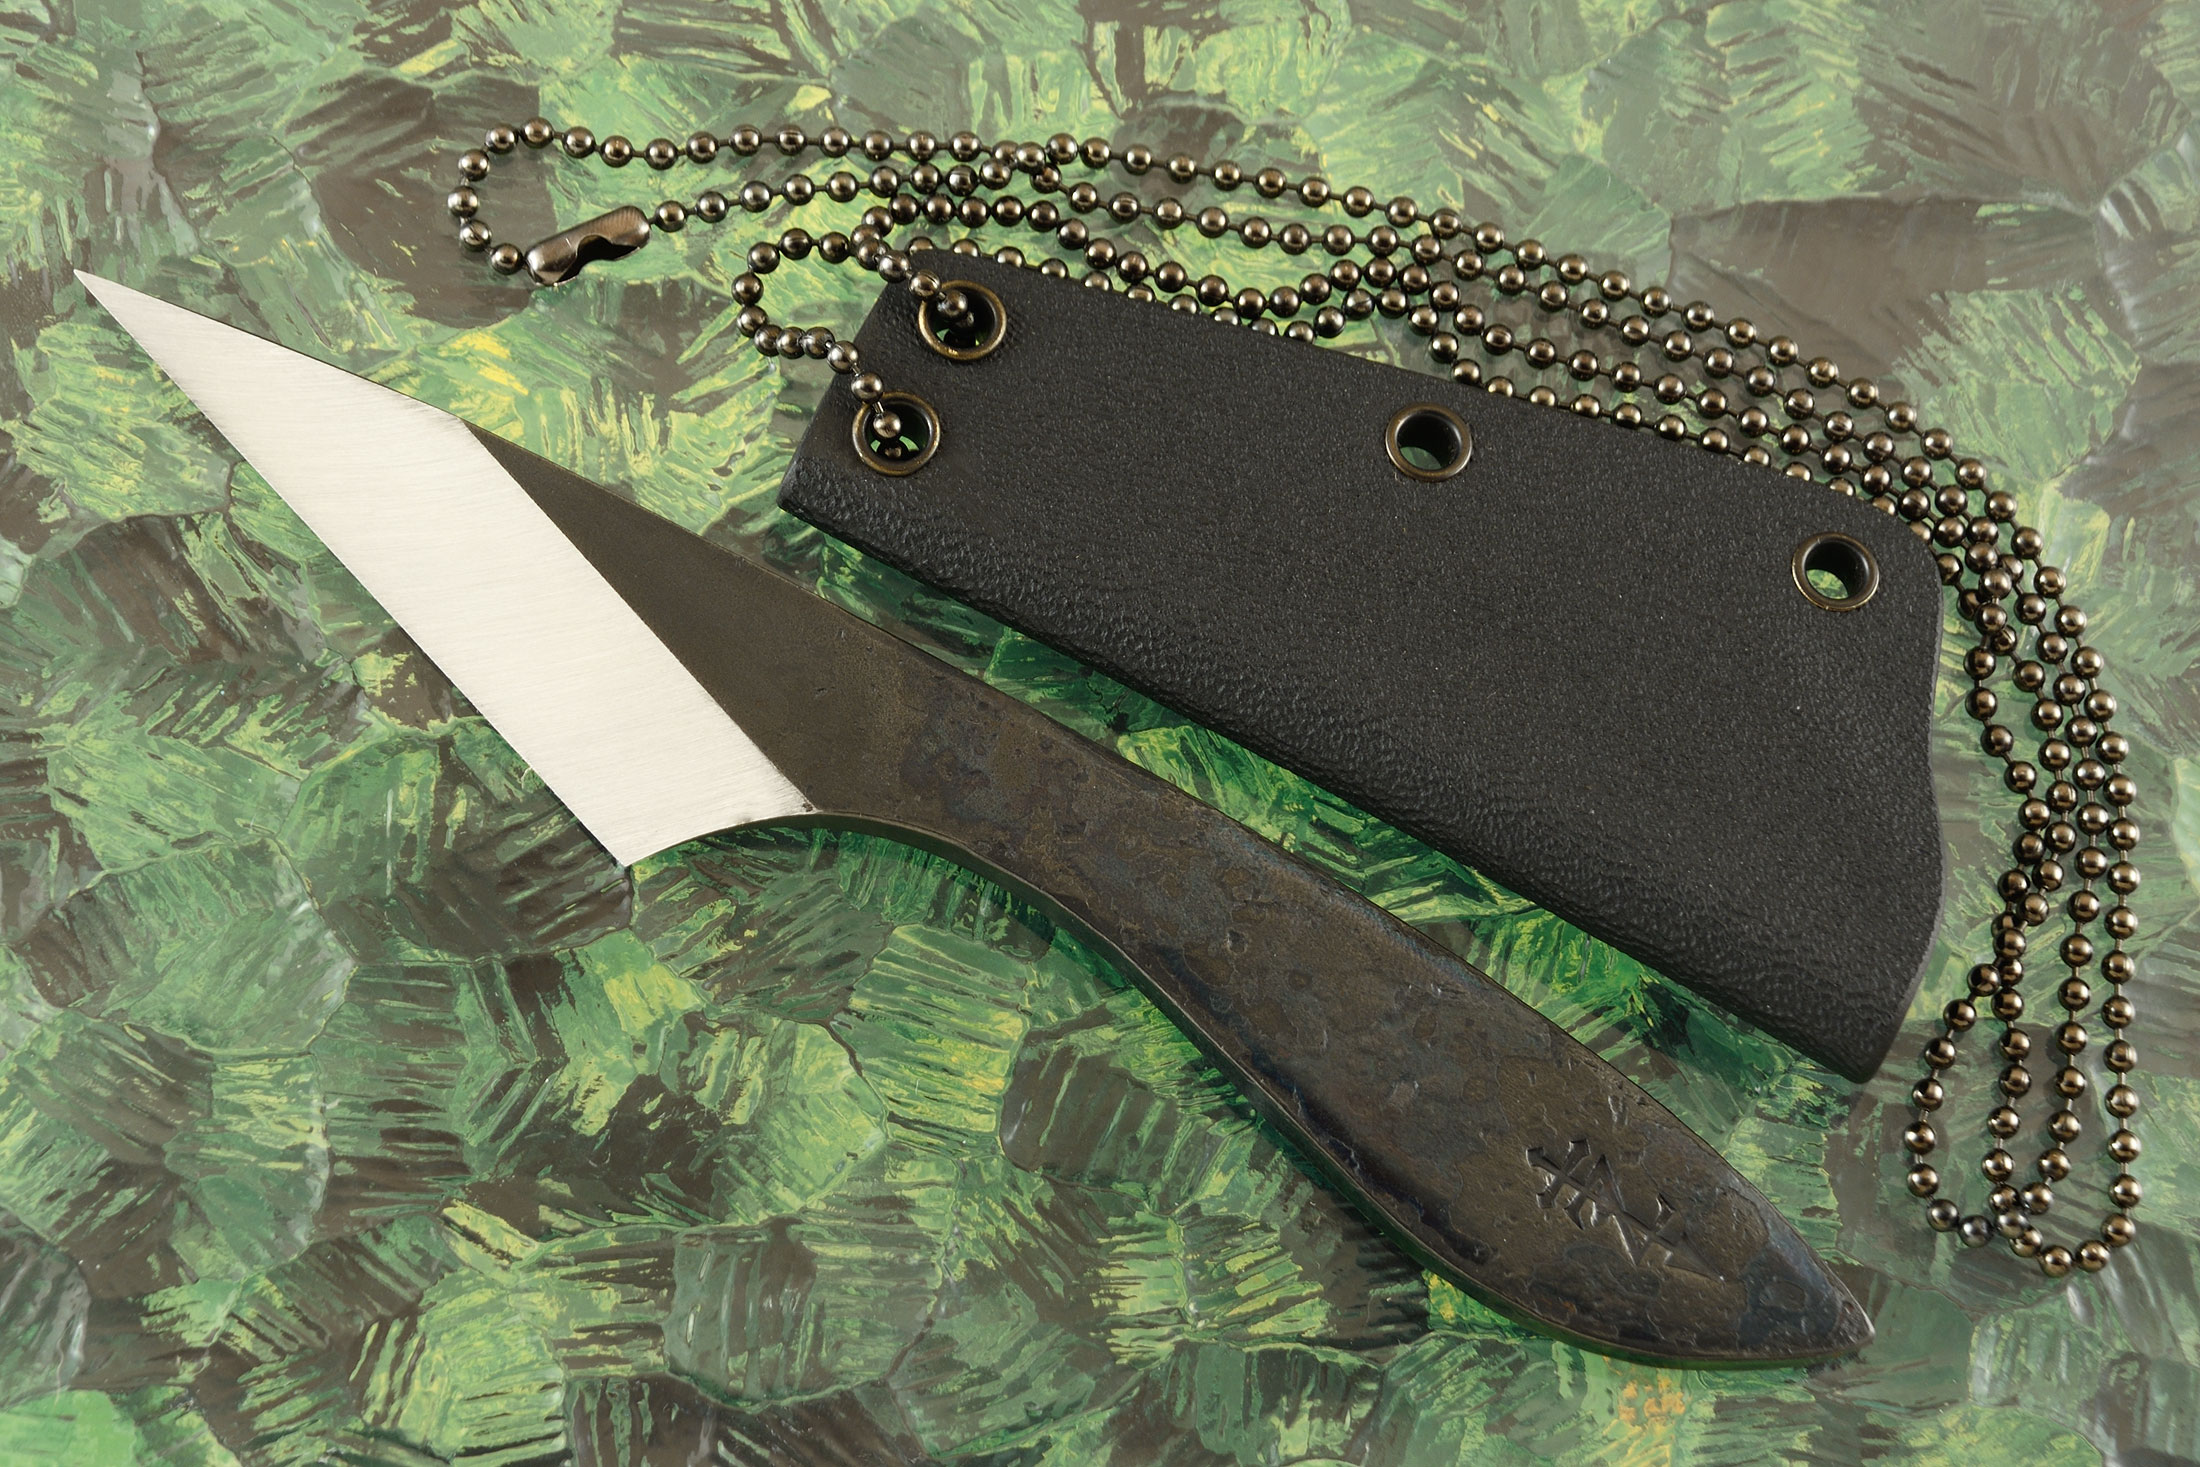 Ecos Knives Small Kiridashi Knife Brown Cord With Kydex Sheath - Tactical  Elements Inc